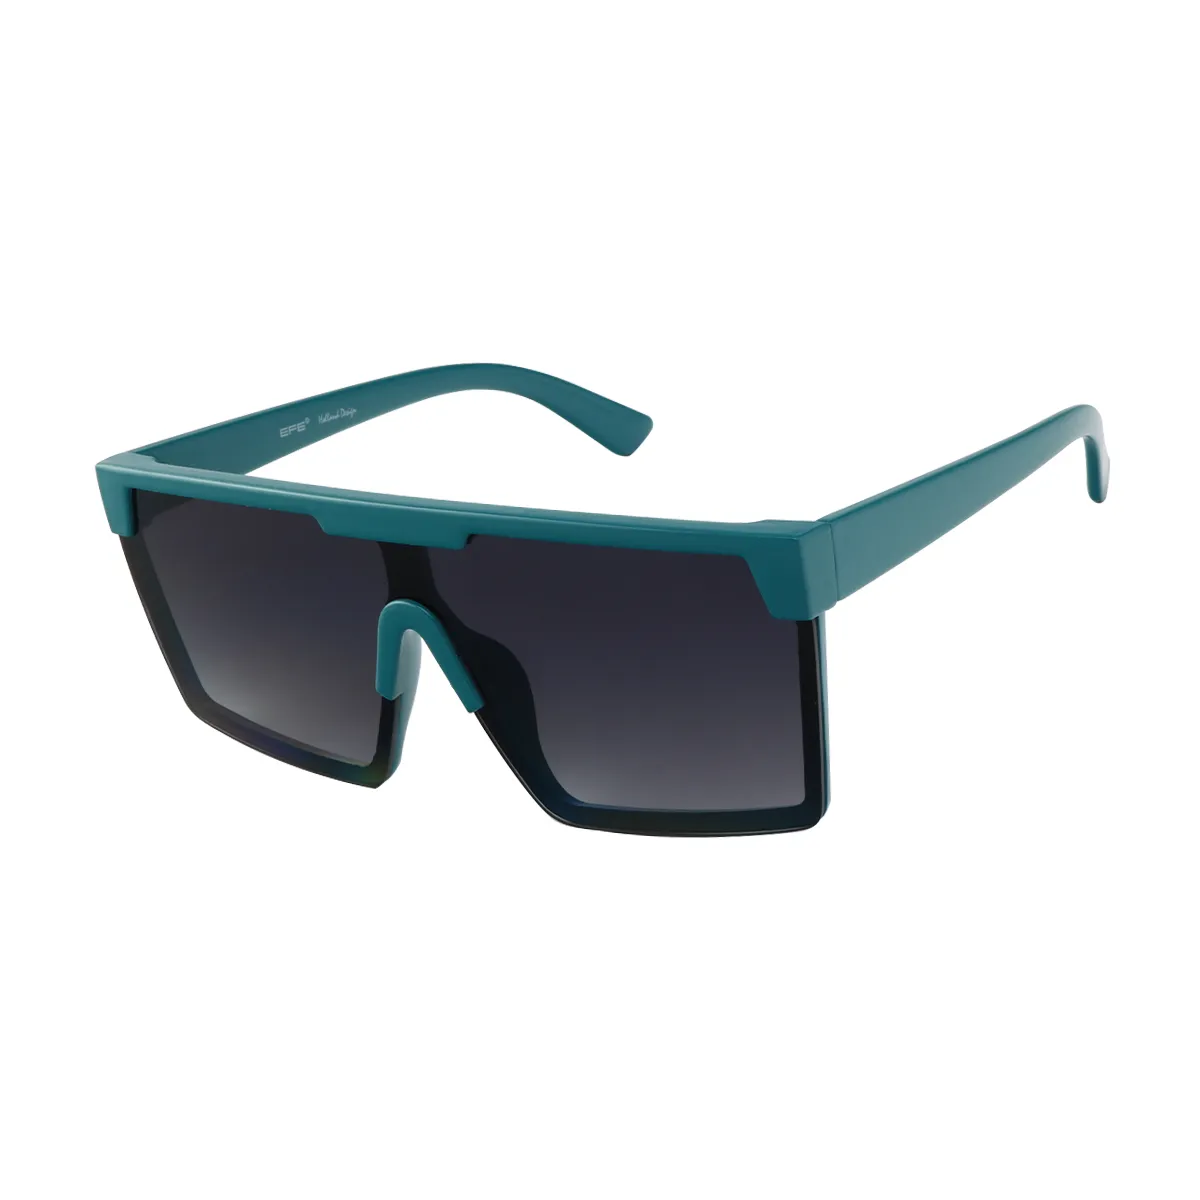 Reese -  Lake blue Sunglasses for Women